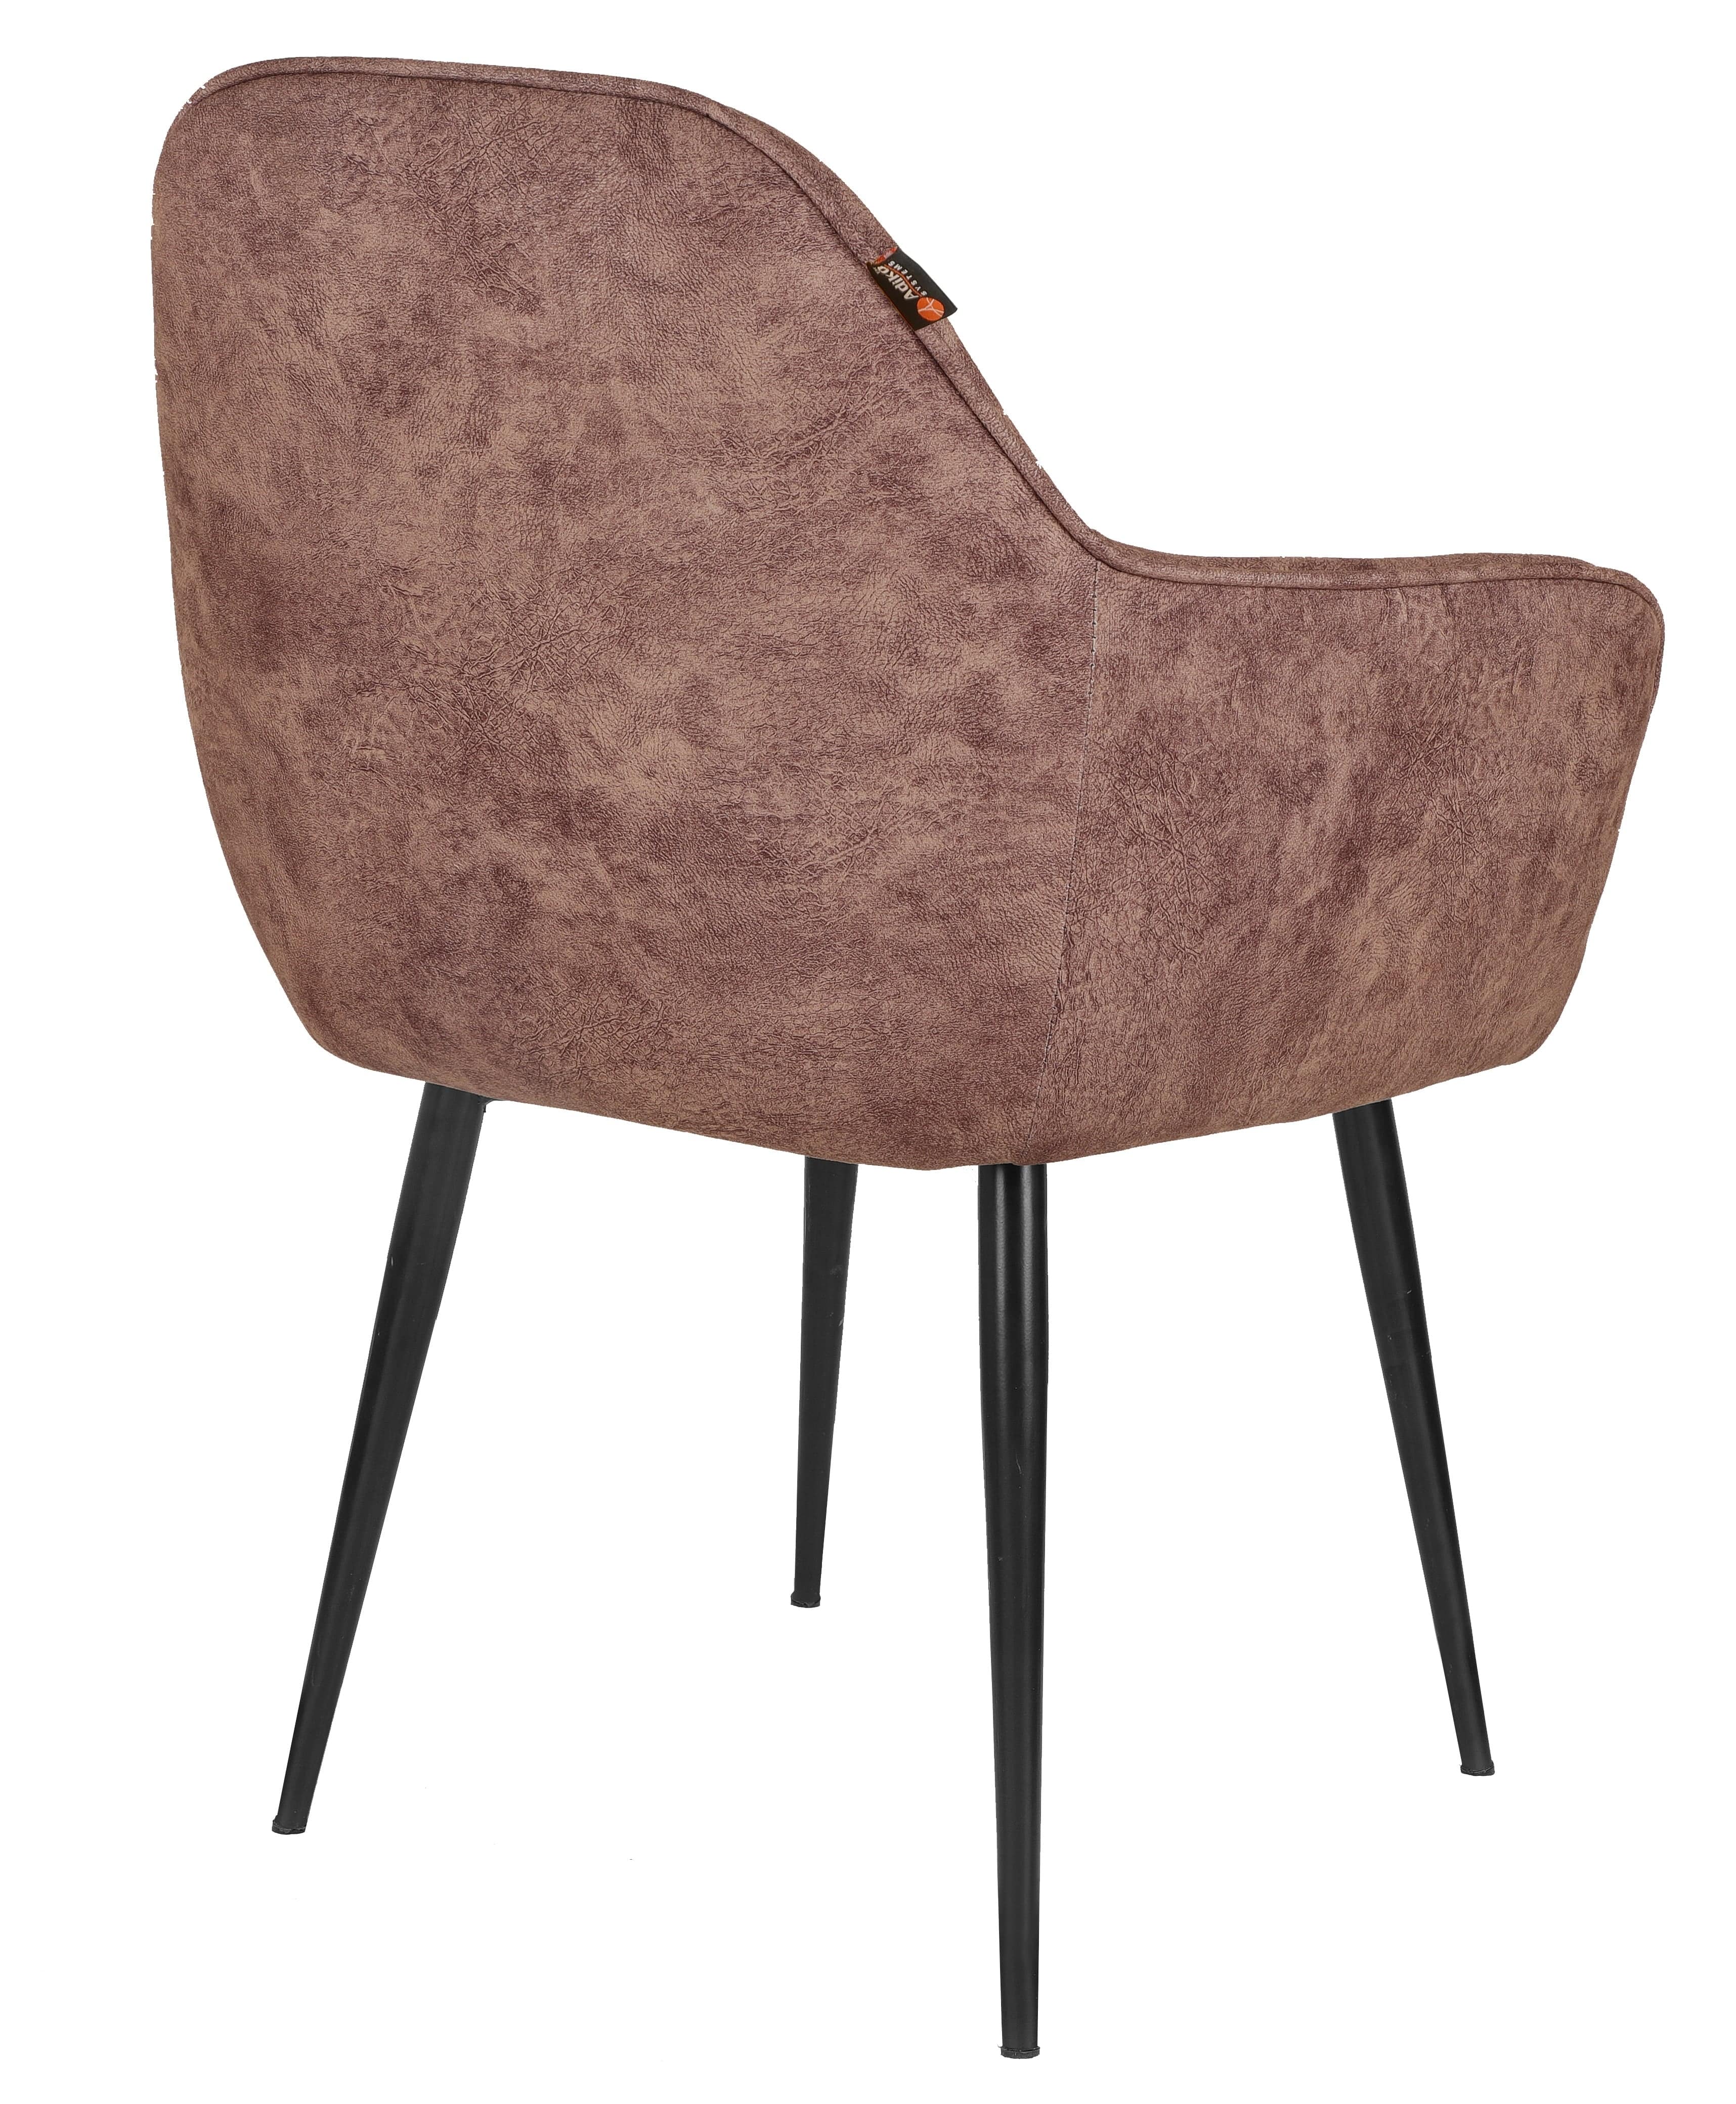 Adiko Lounge Chair Stool in Brown Color